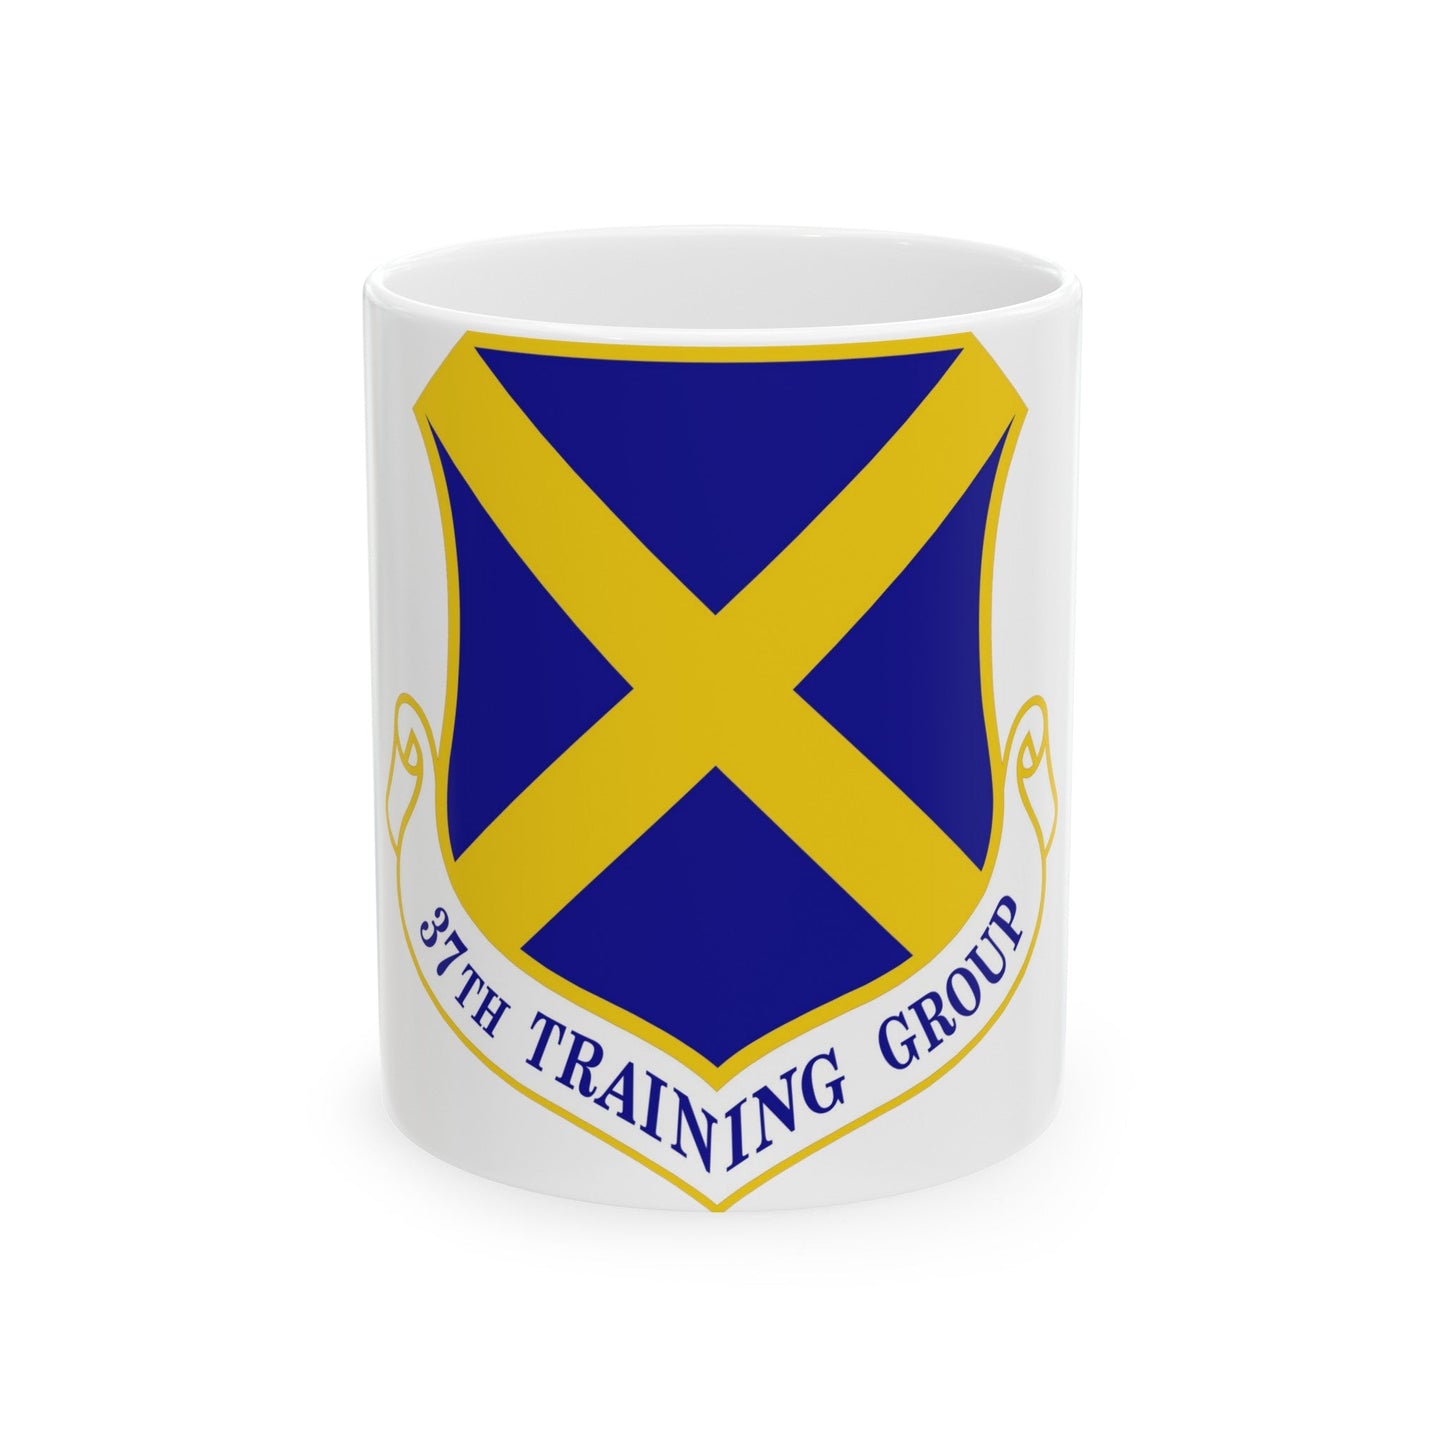 37th Training Group (U.S. Air Force) White Coffee Mug